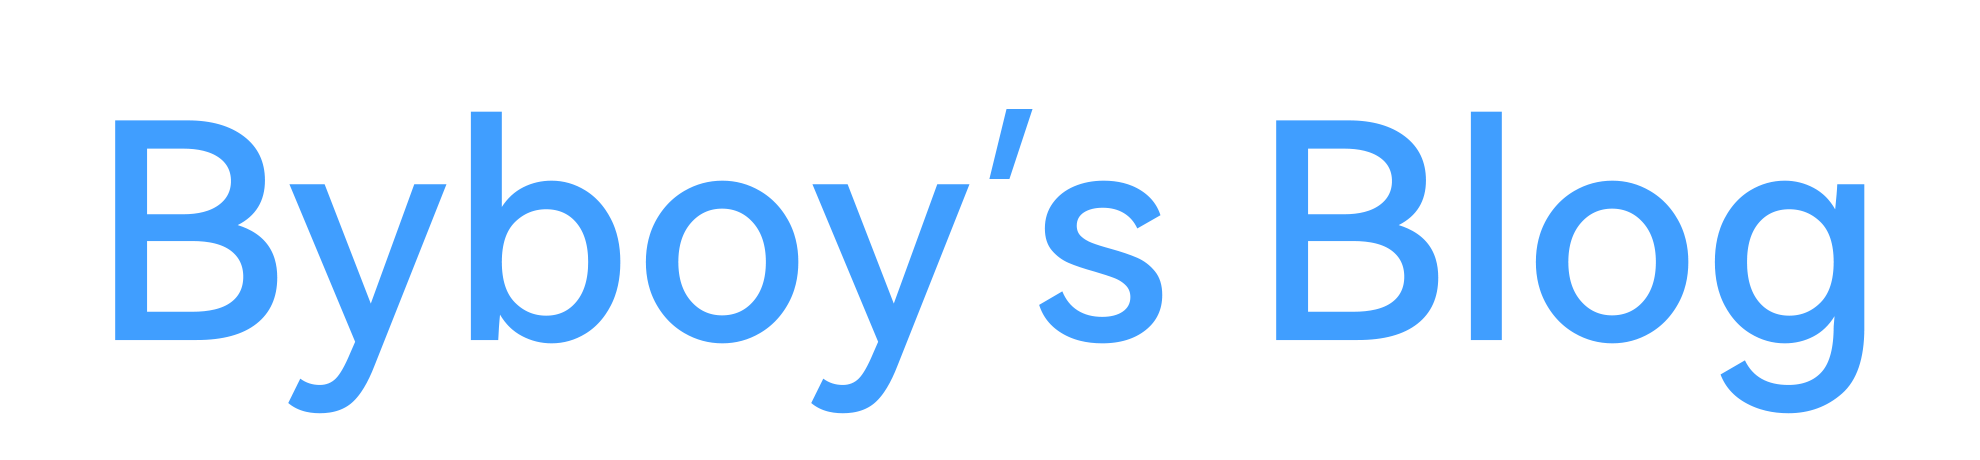 Byboy's Blog